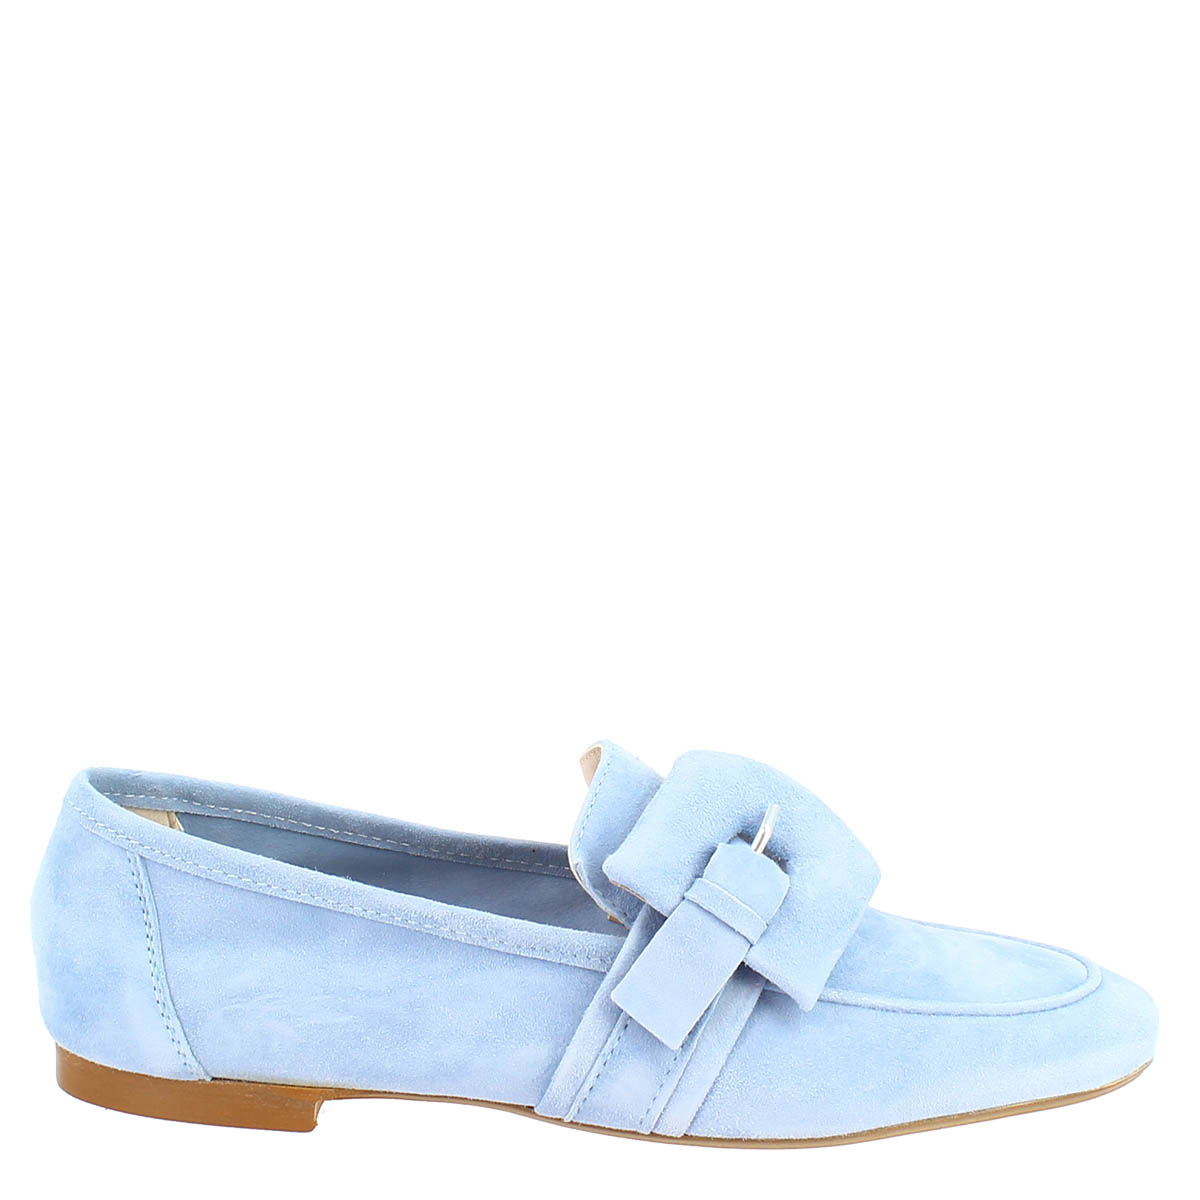 Sky Blue Suede Shoes